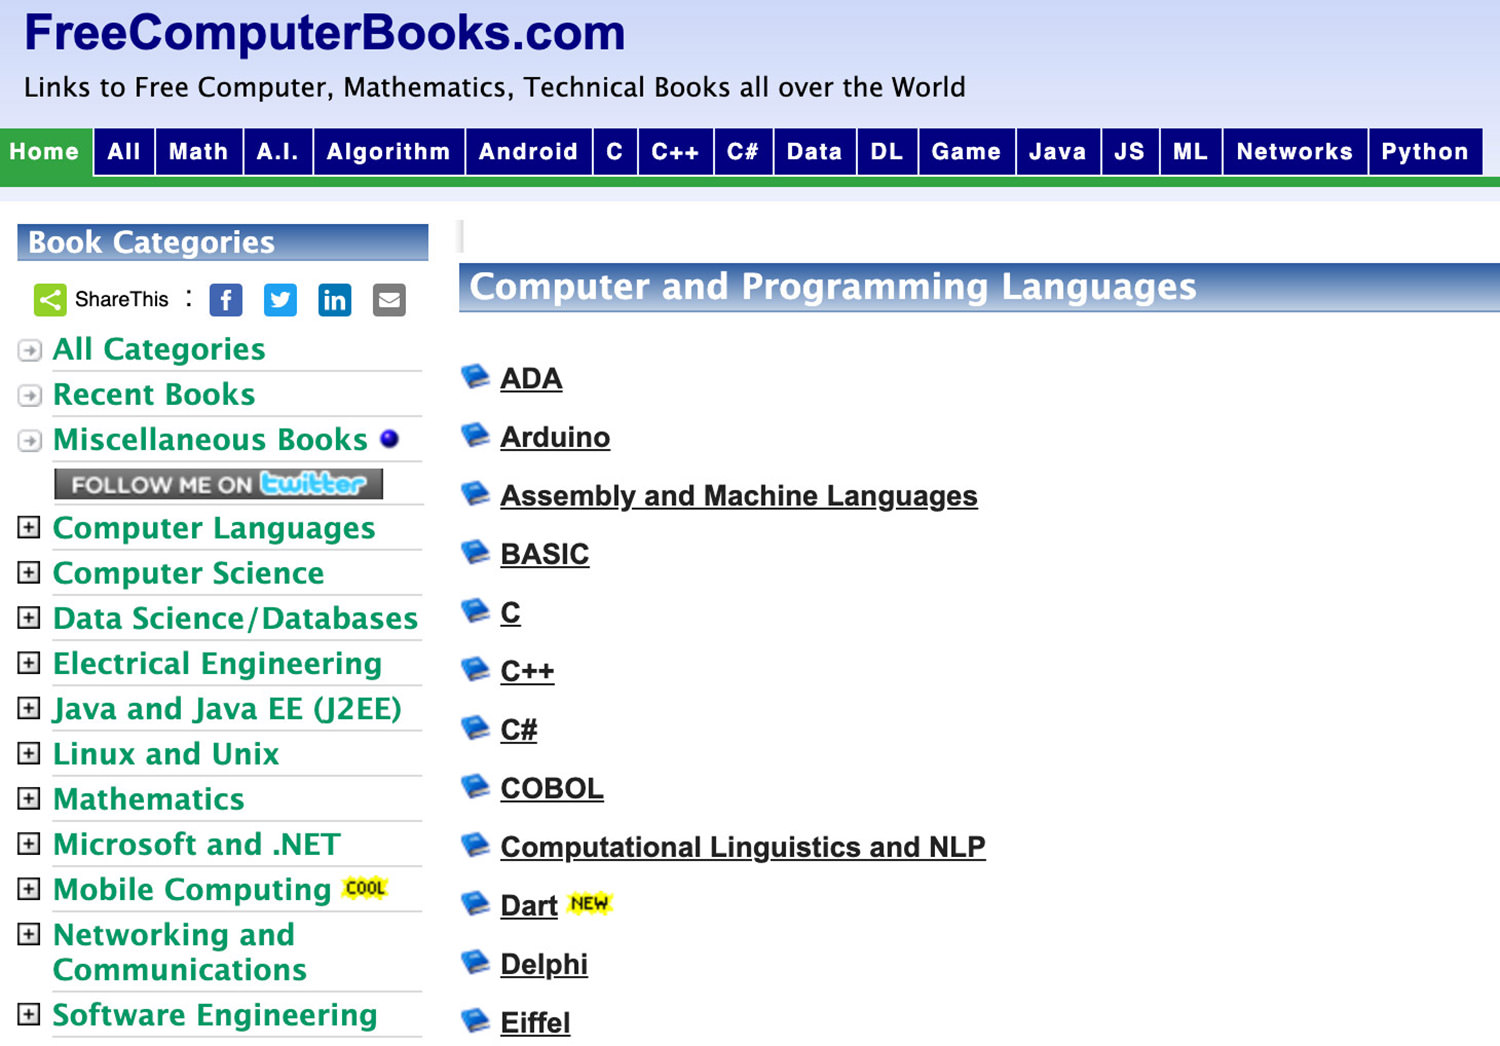 Image of FreeComputerBooks website